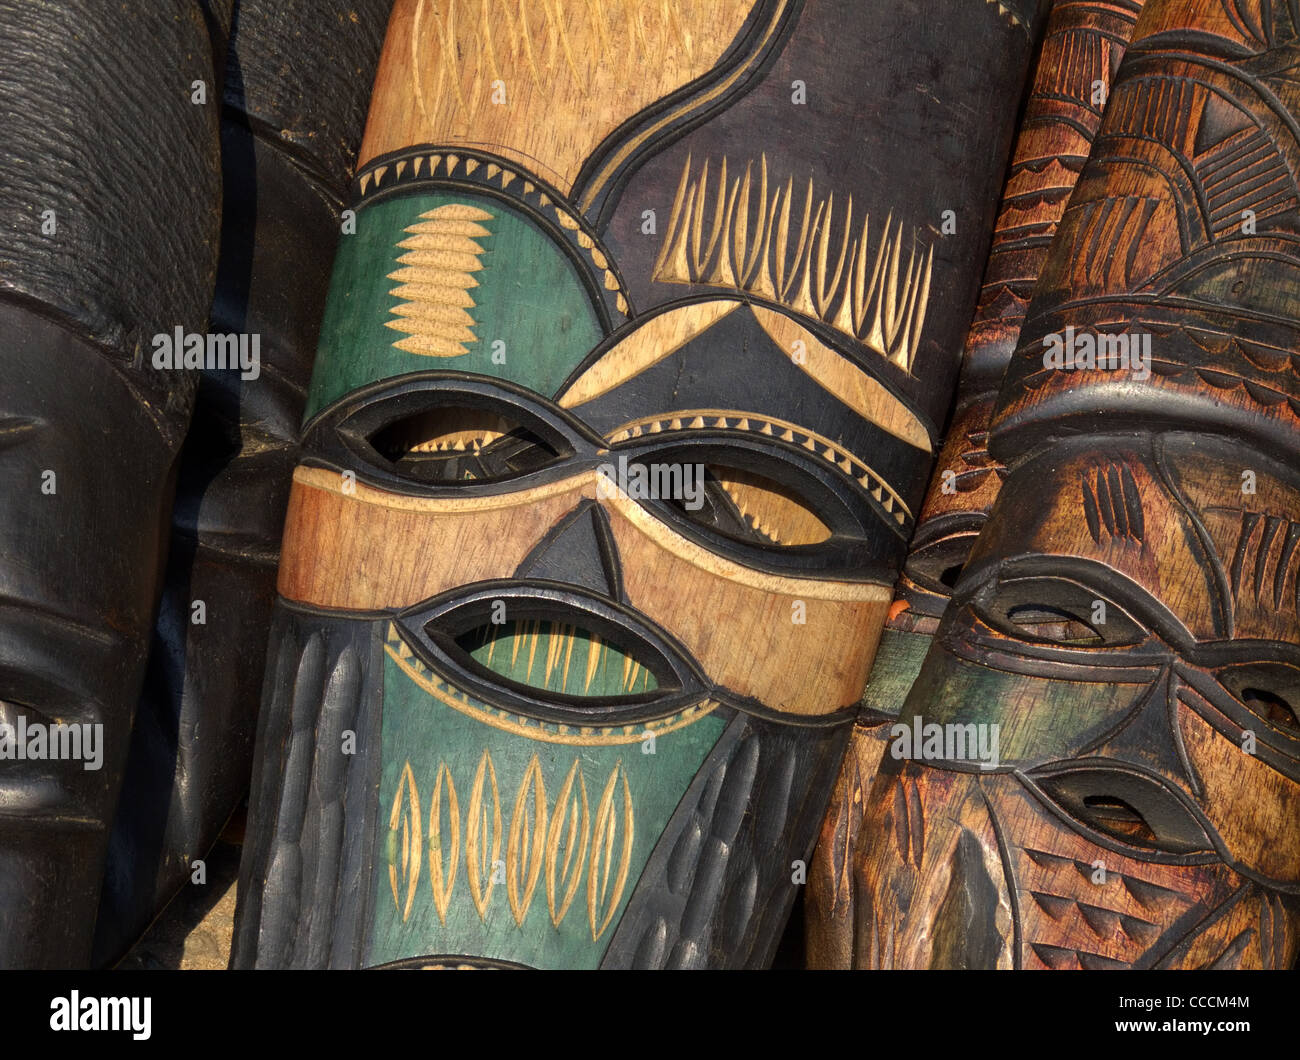 Cartoon tiki mask, aborigine face wooden ethnic art sculpture, ritual tribe symbols